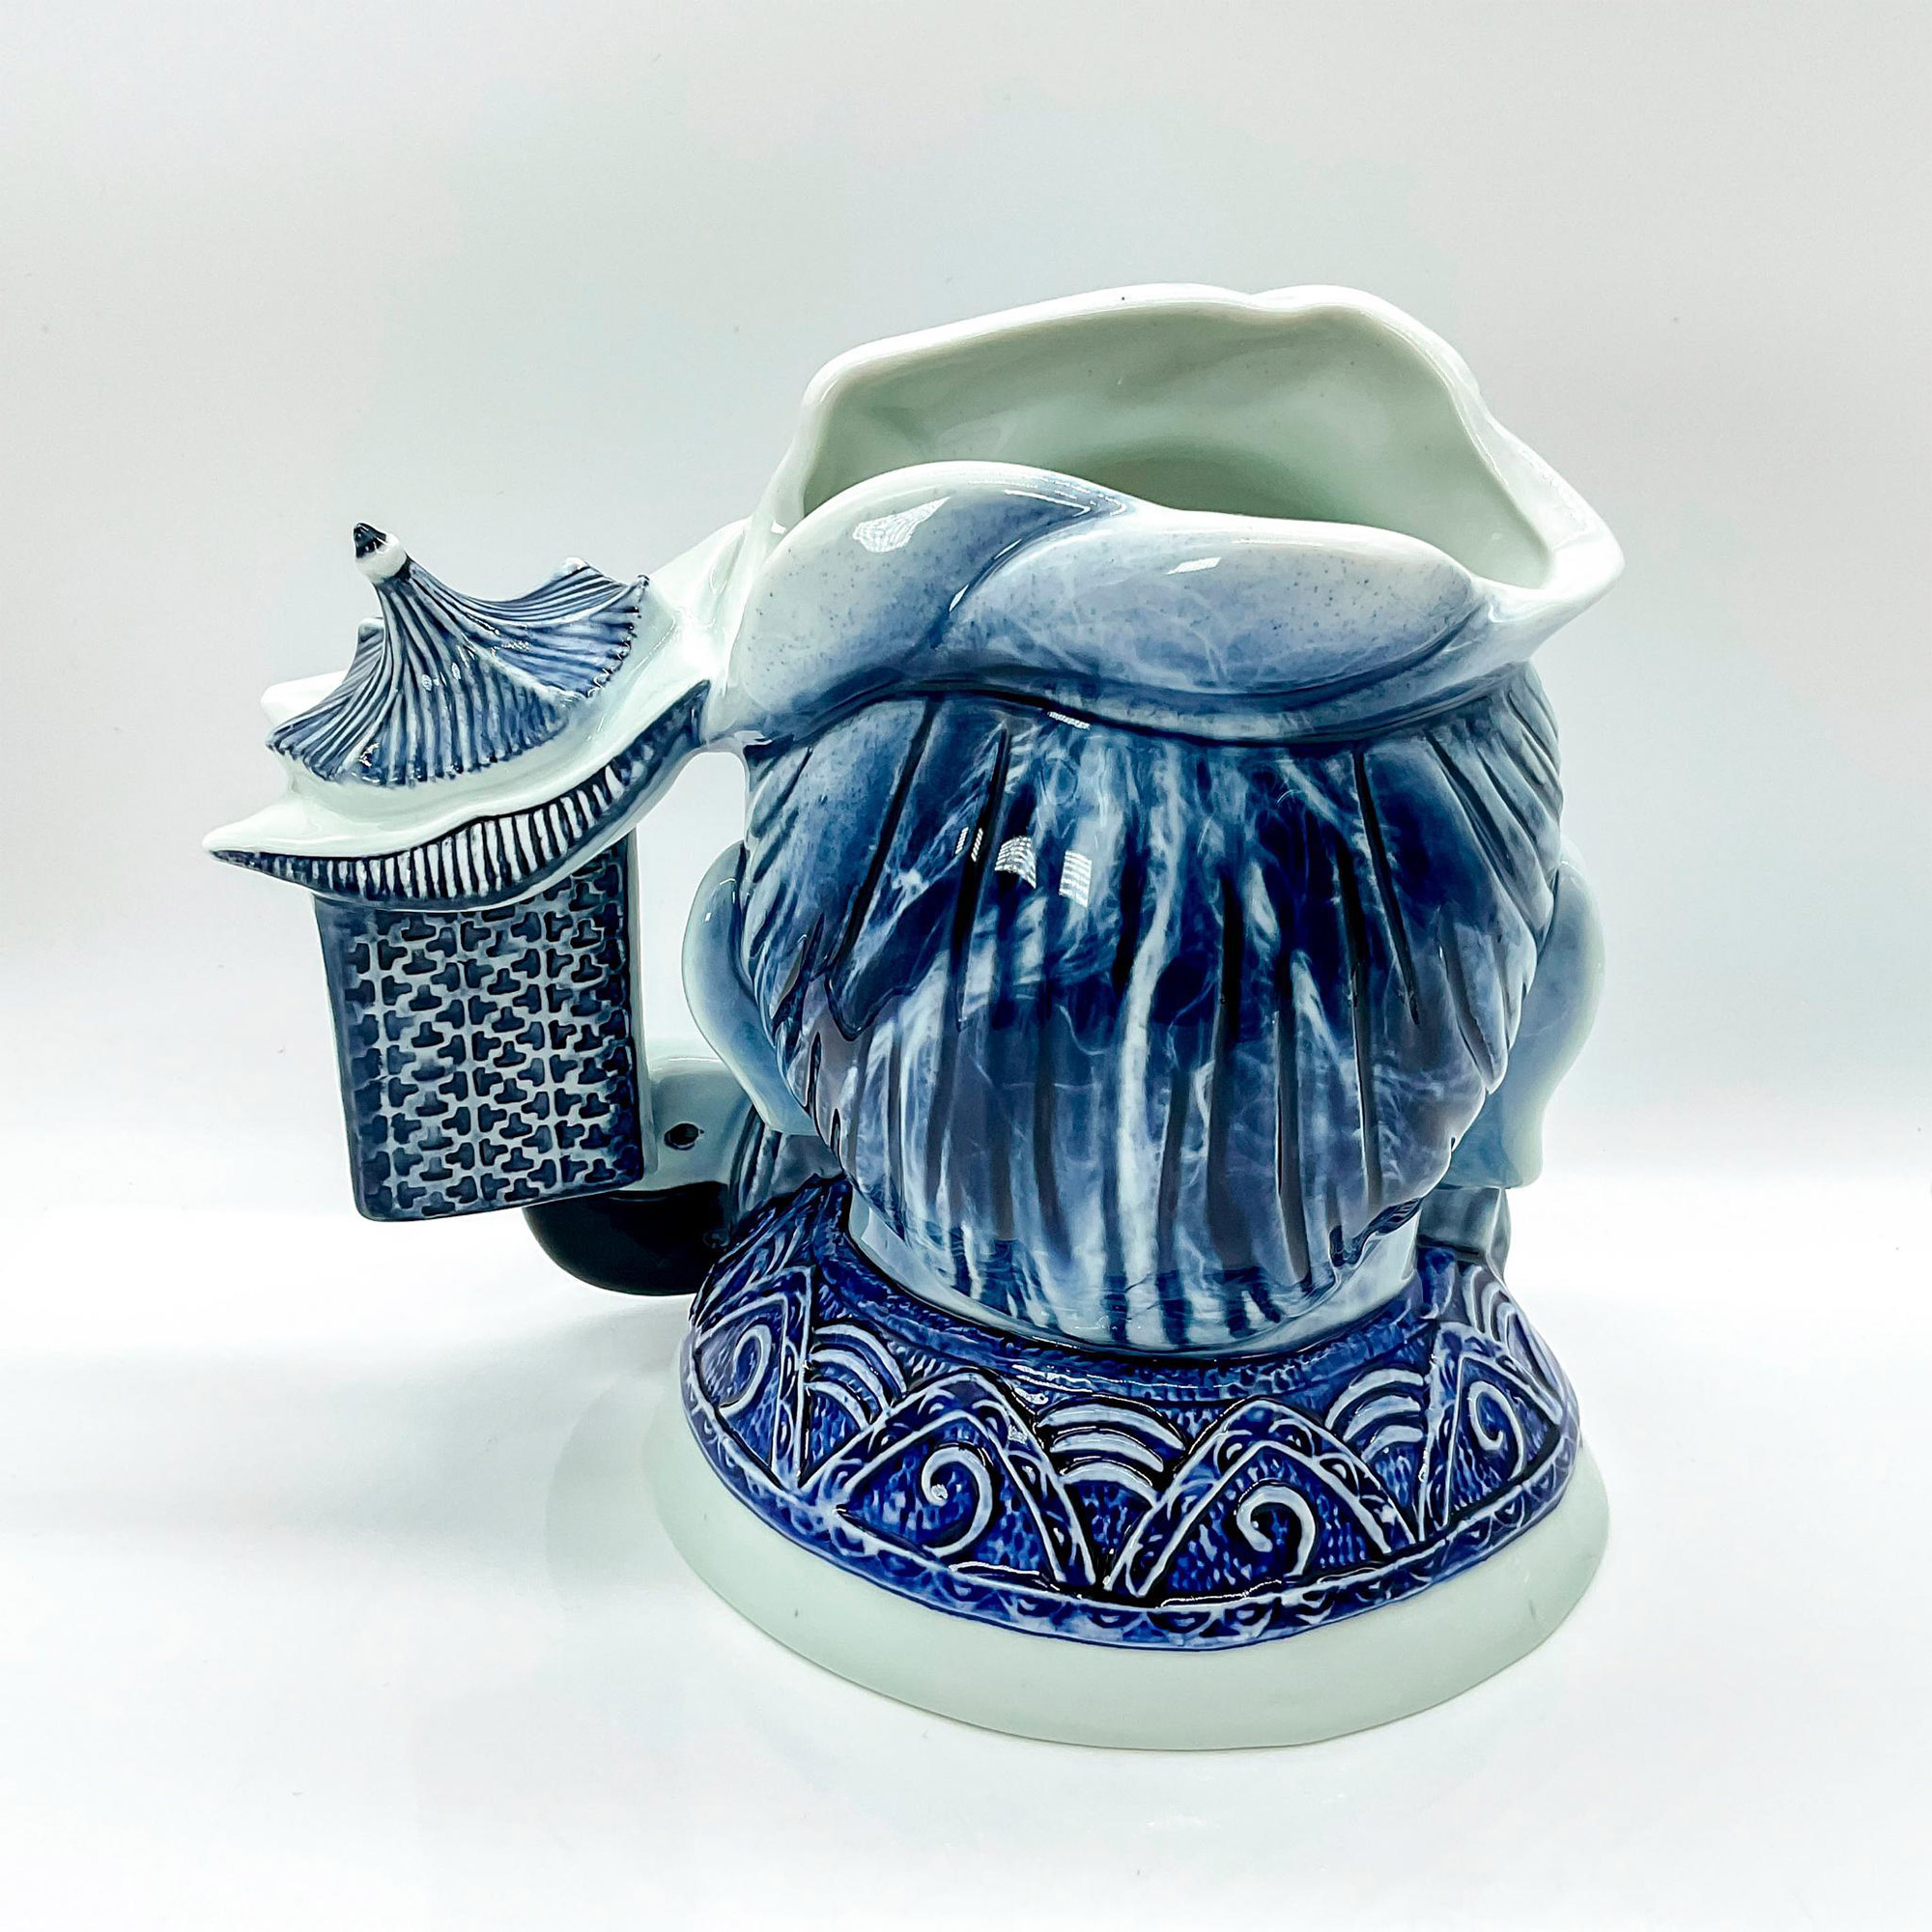 Confucius D7003 Blue Flambe - Large - Royal Doulton Character Jug - Image 2 of 3